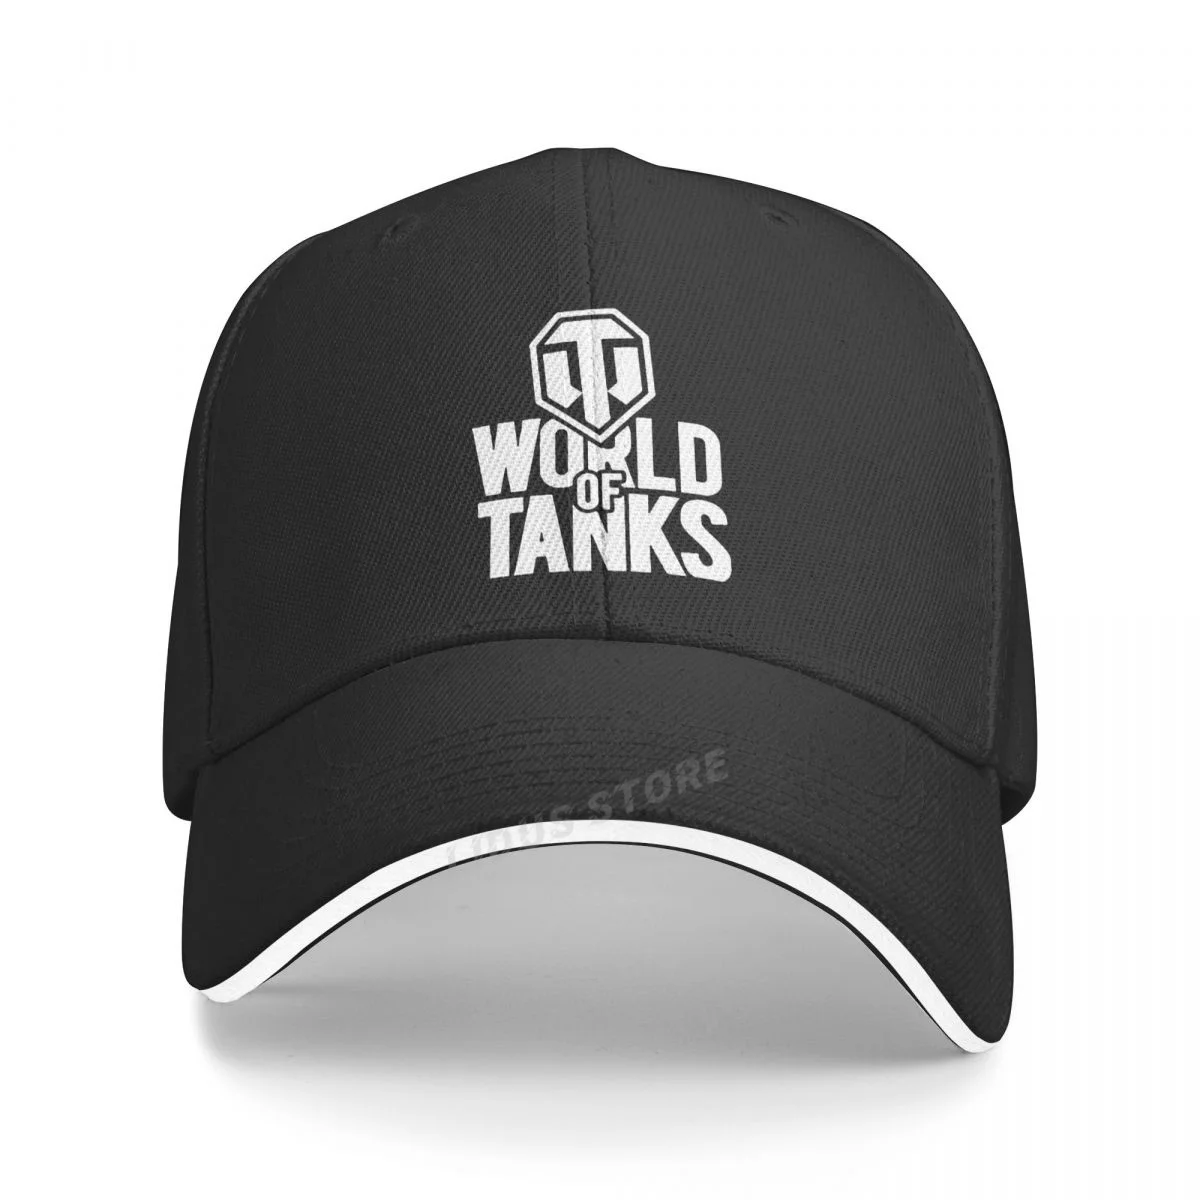 World Of Tanks Baseball Caps Fashion Cool Game Hat Unisex Outdoors Men Hats